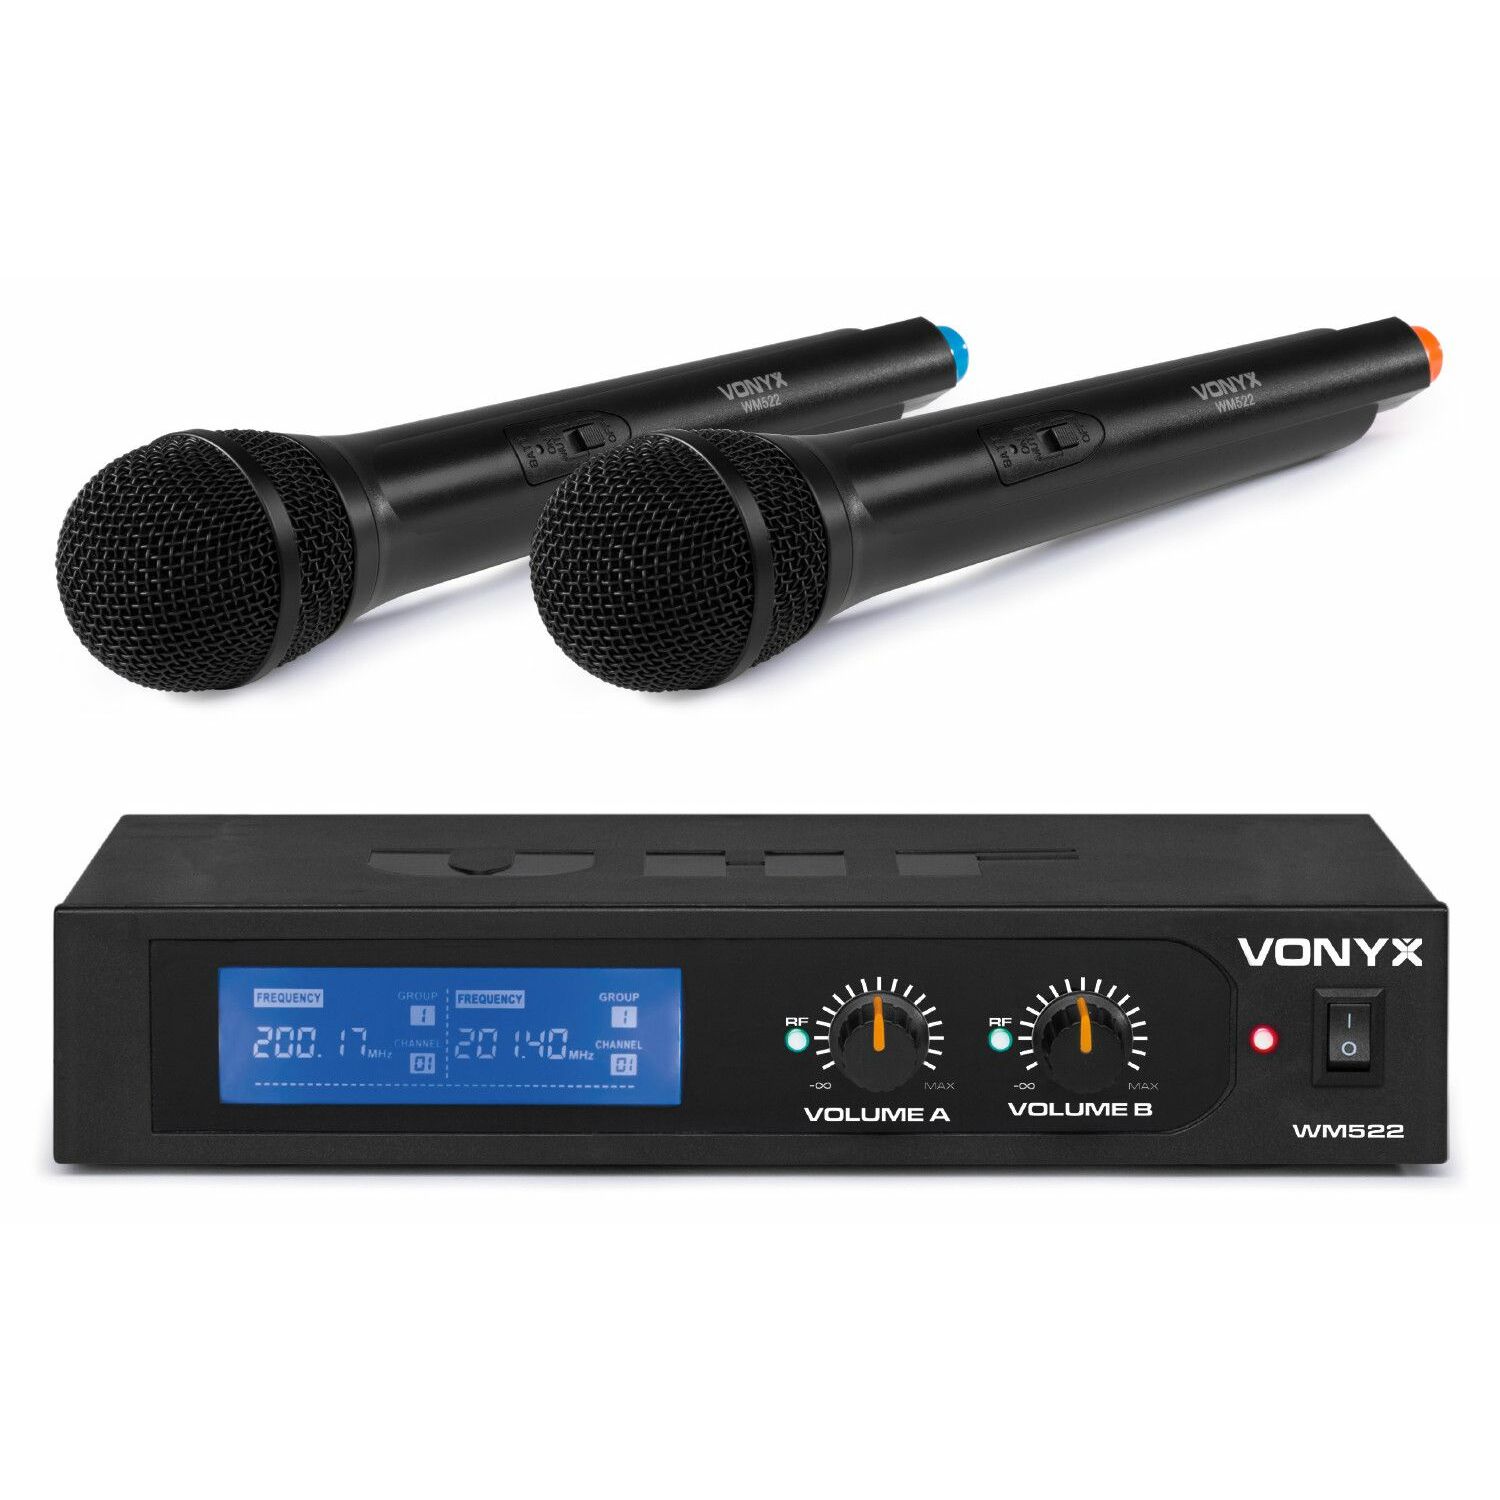 Retourdeal - Vonyx WM522 draadloze microfoonset 2-kanaals VHF